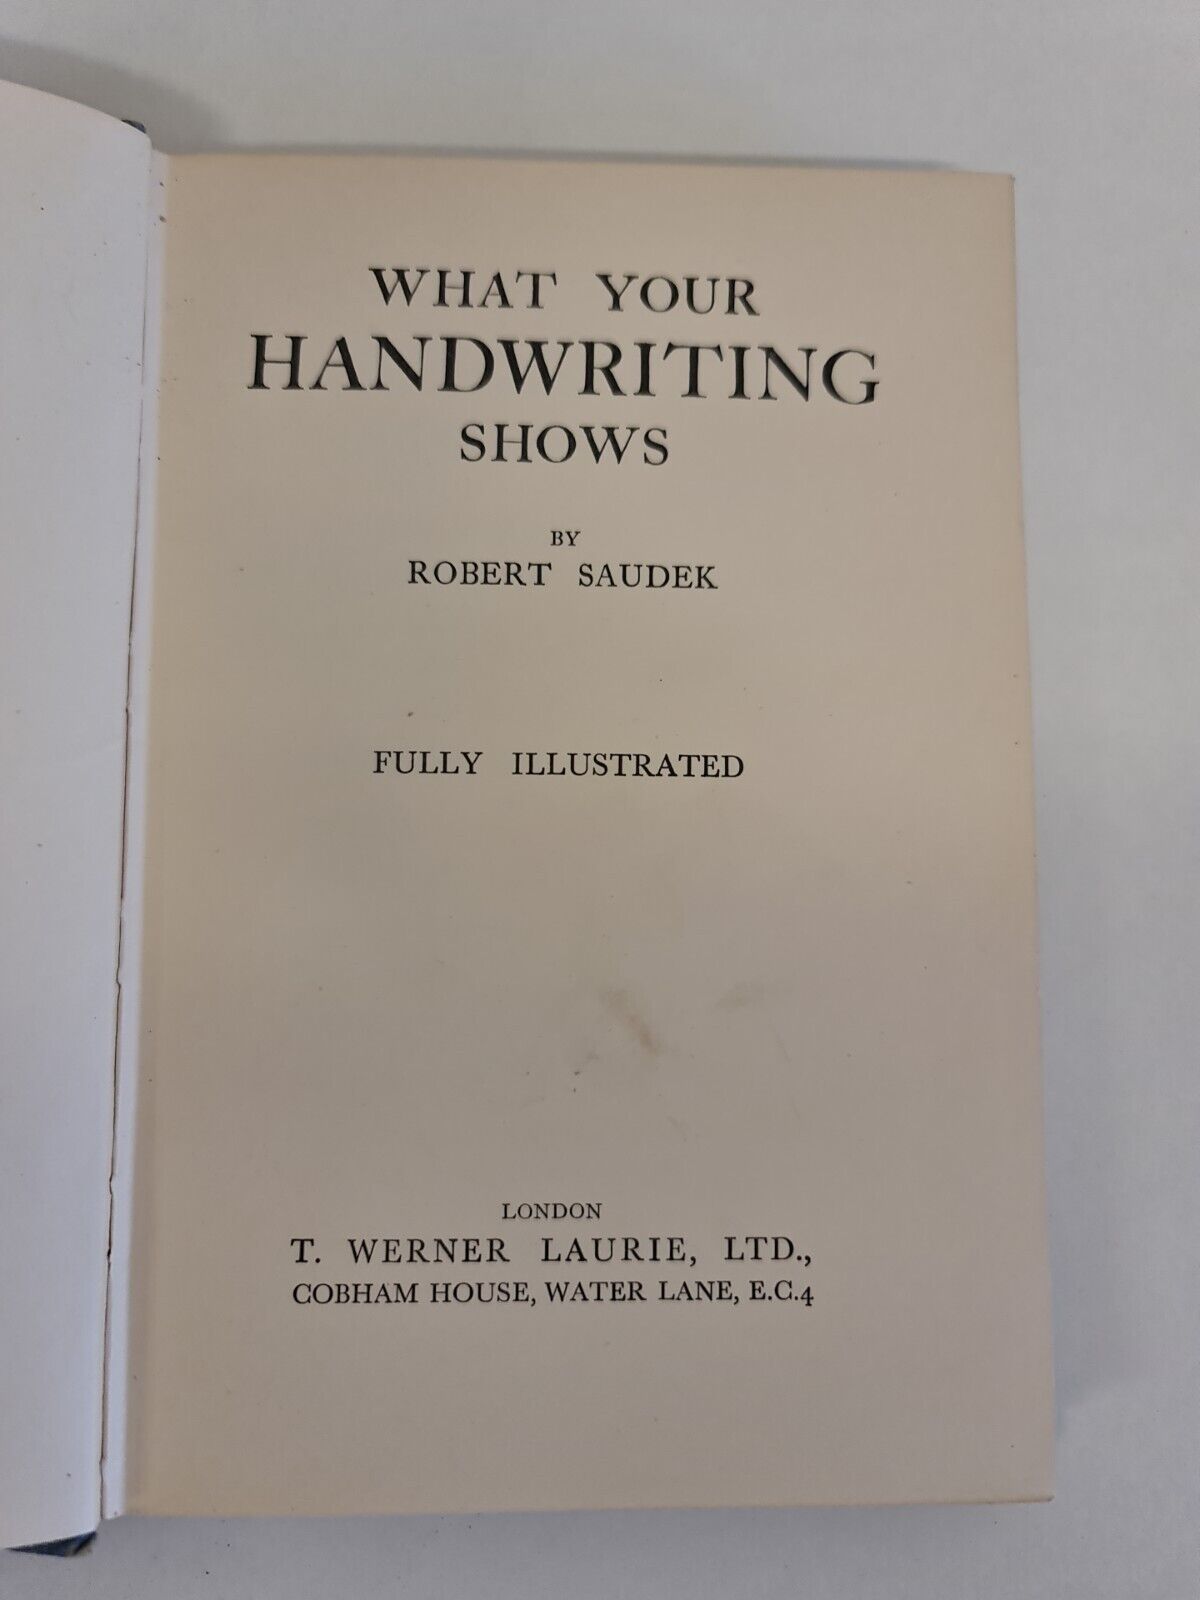 What Your Handwriting Shows by Robert Saudek (1932)